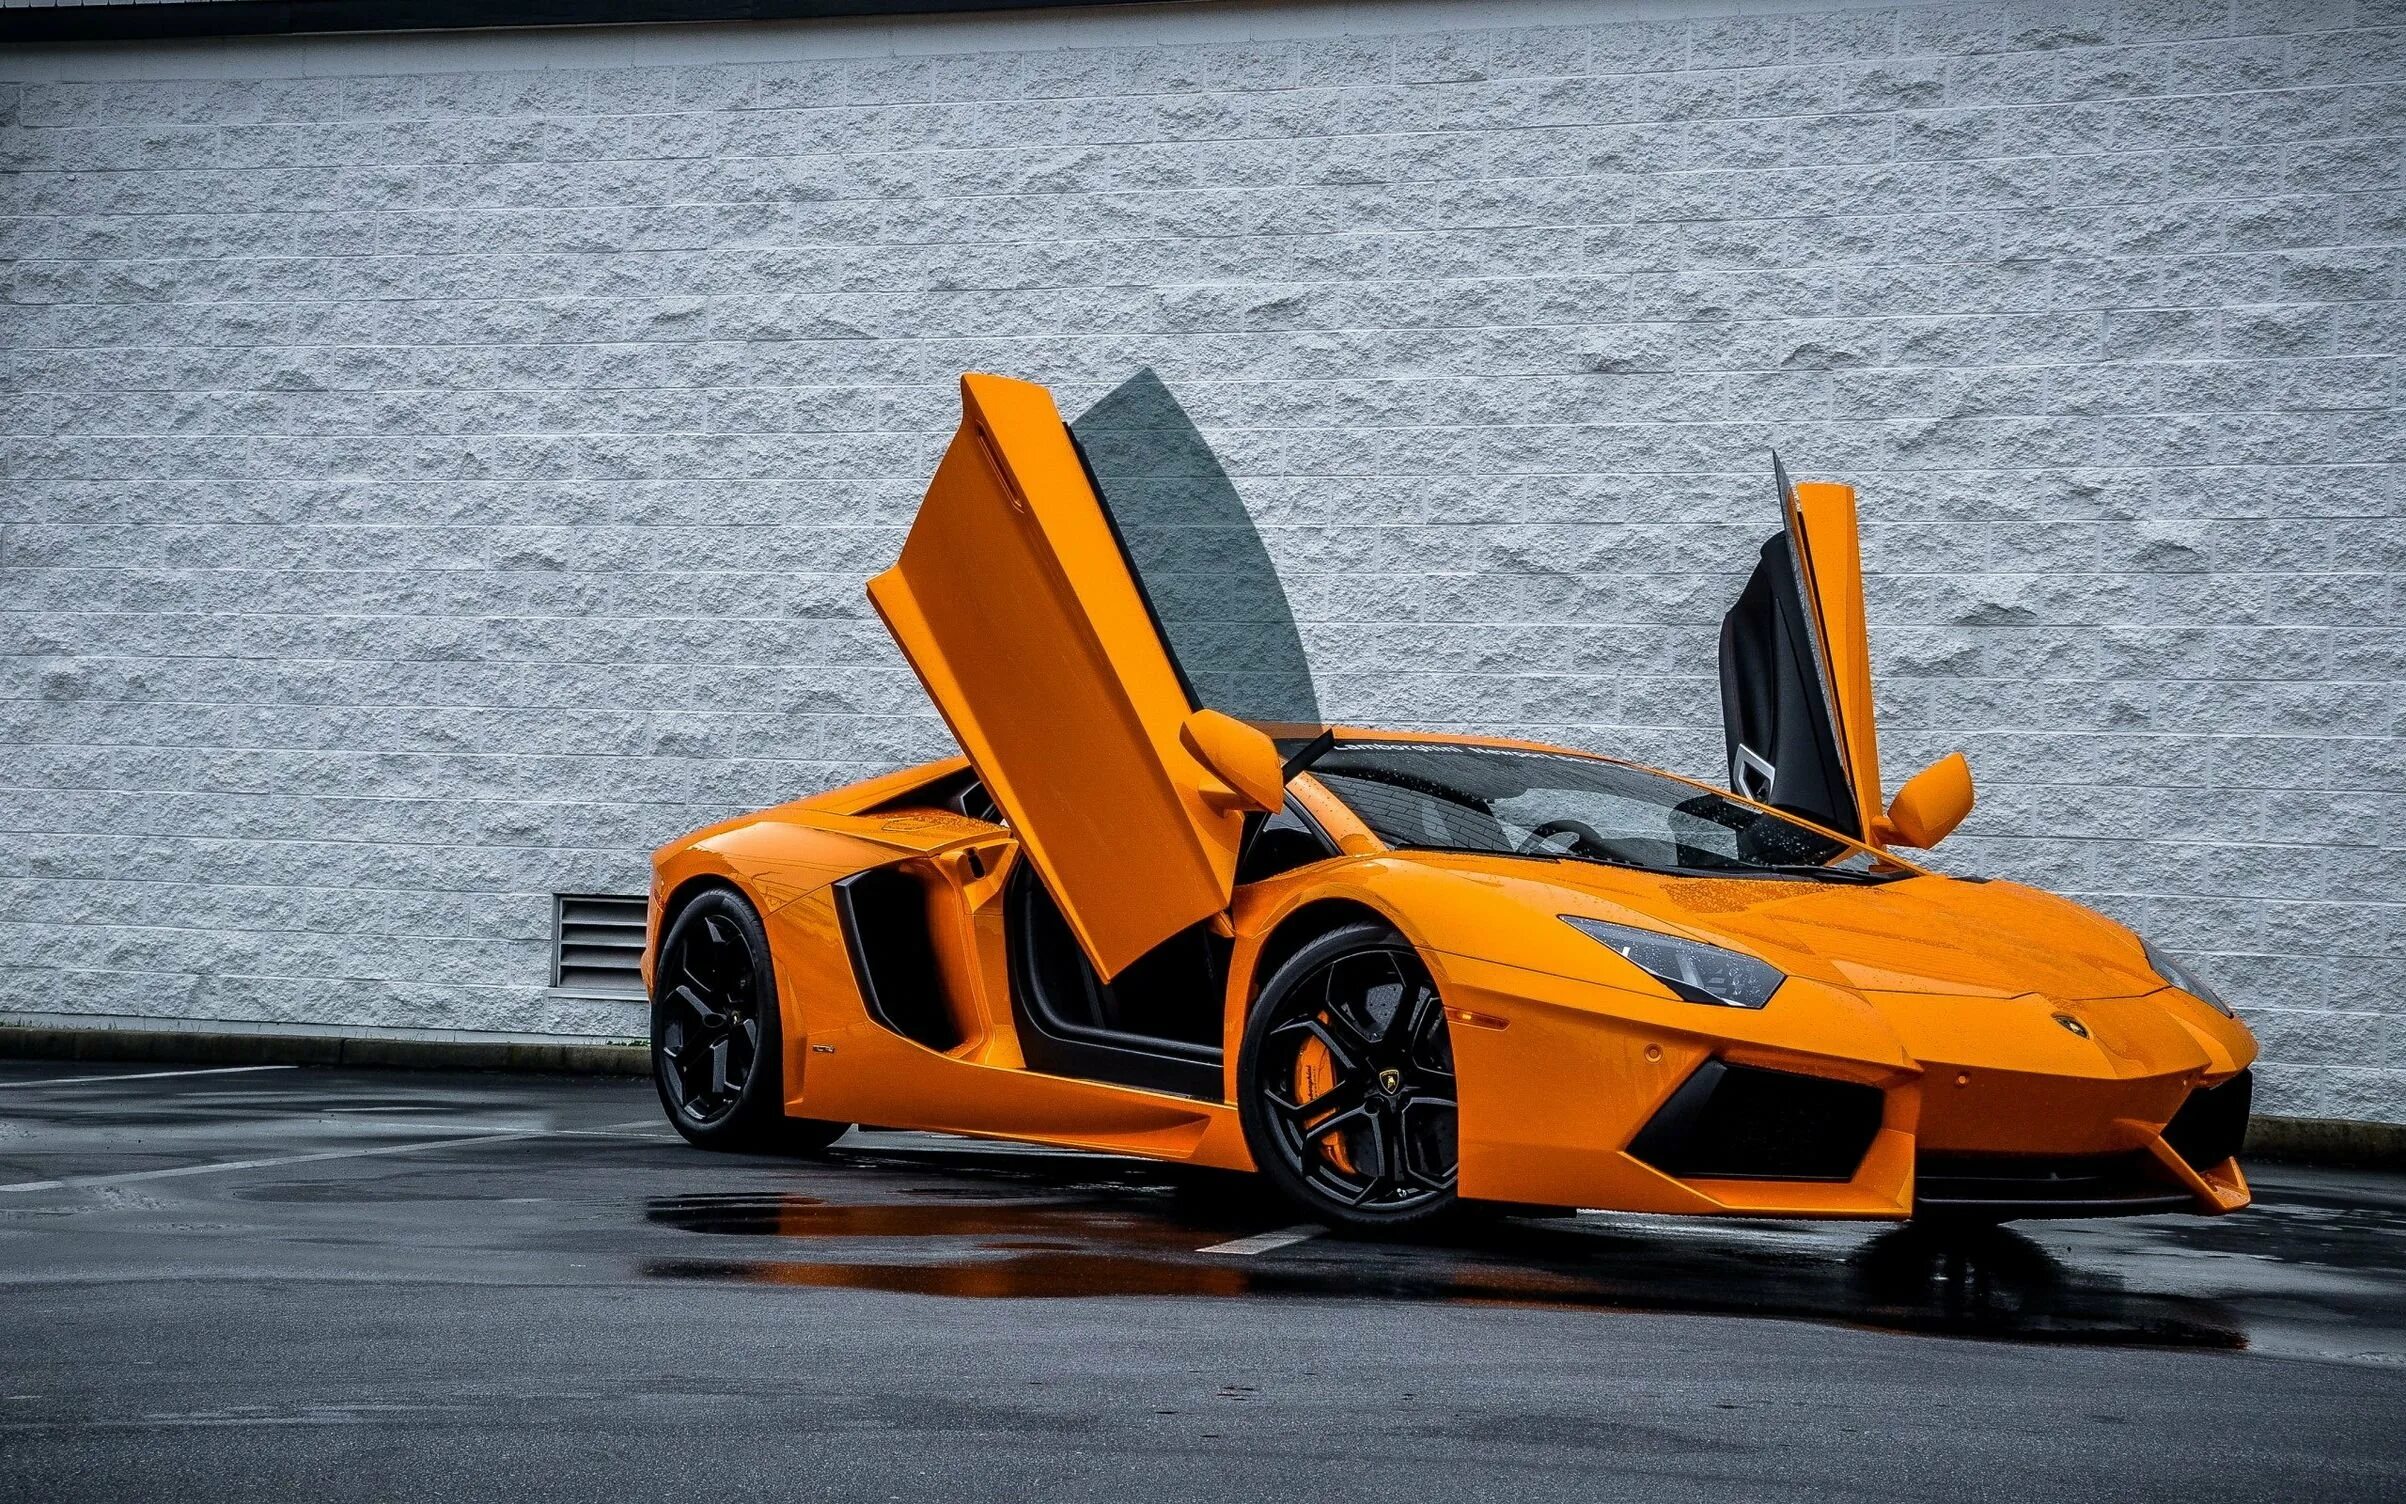 Открой картинки машин. Ламборджини авентадор. Lamborghini, Orange, Aventador, lp700-4. Ламборджини Авендатор. Ламборджини авентадор оранжевый.